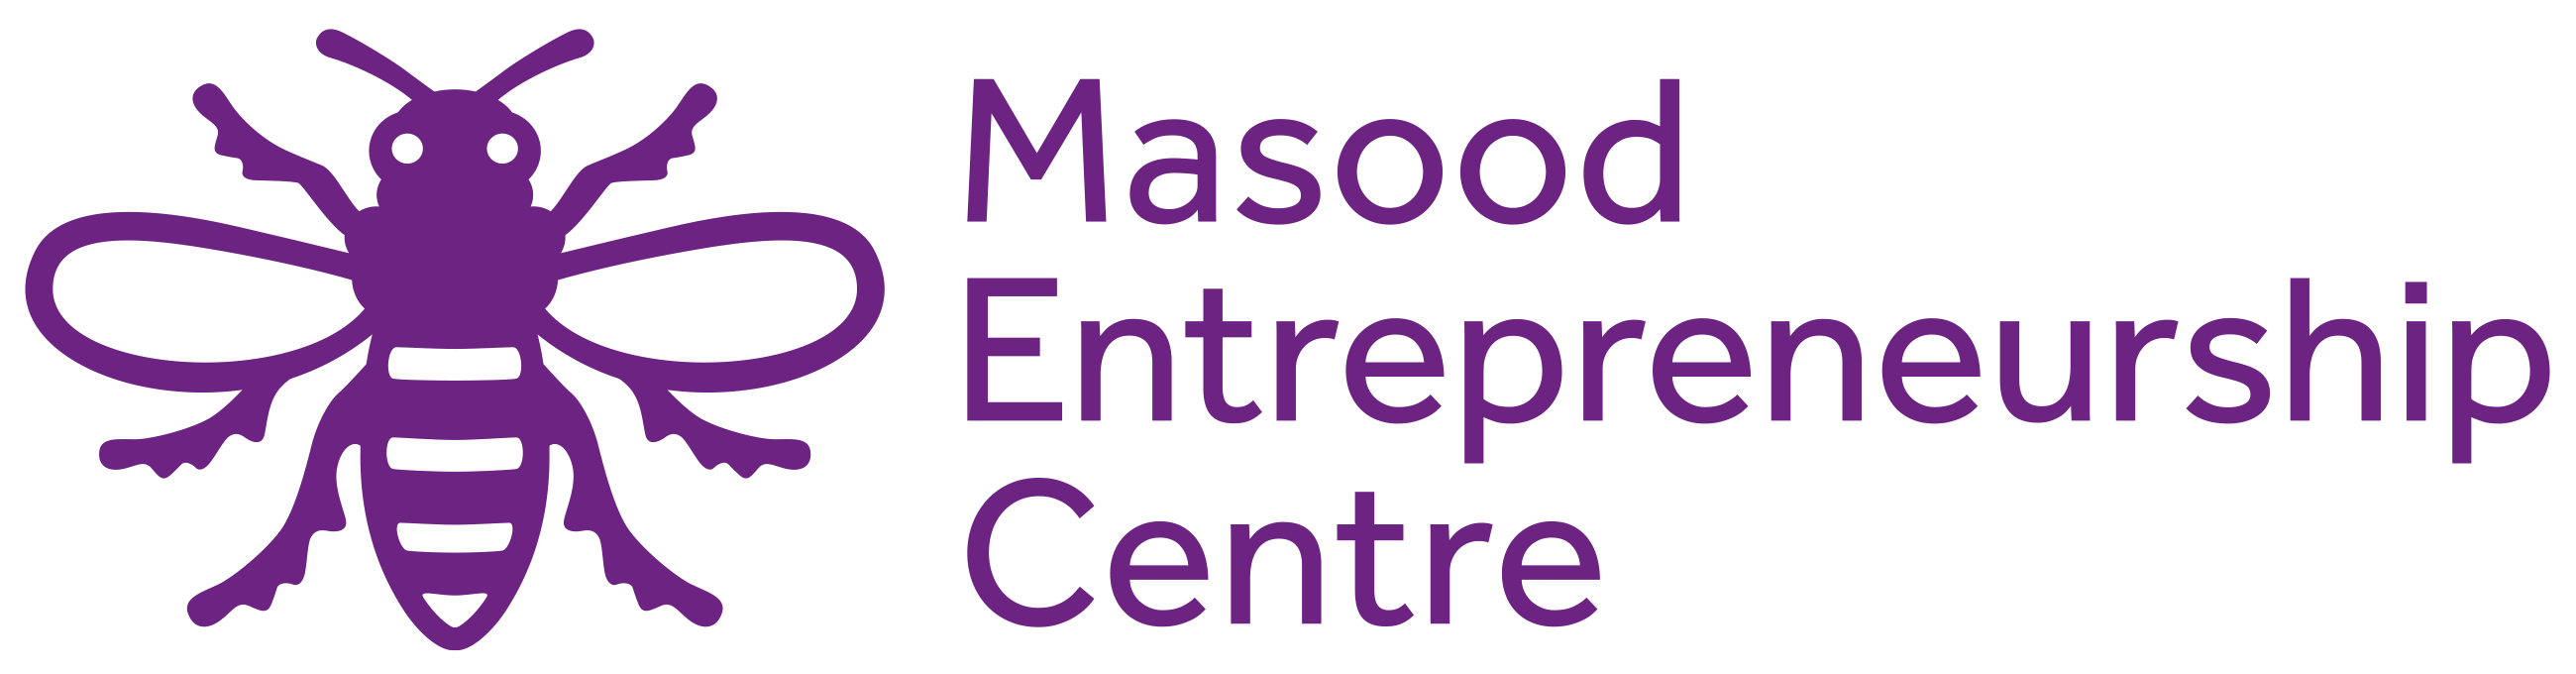 Masood Entrepreneurship Centre